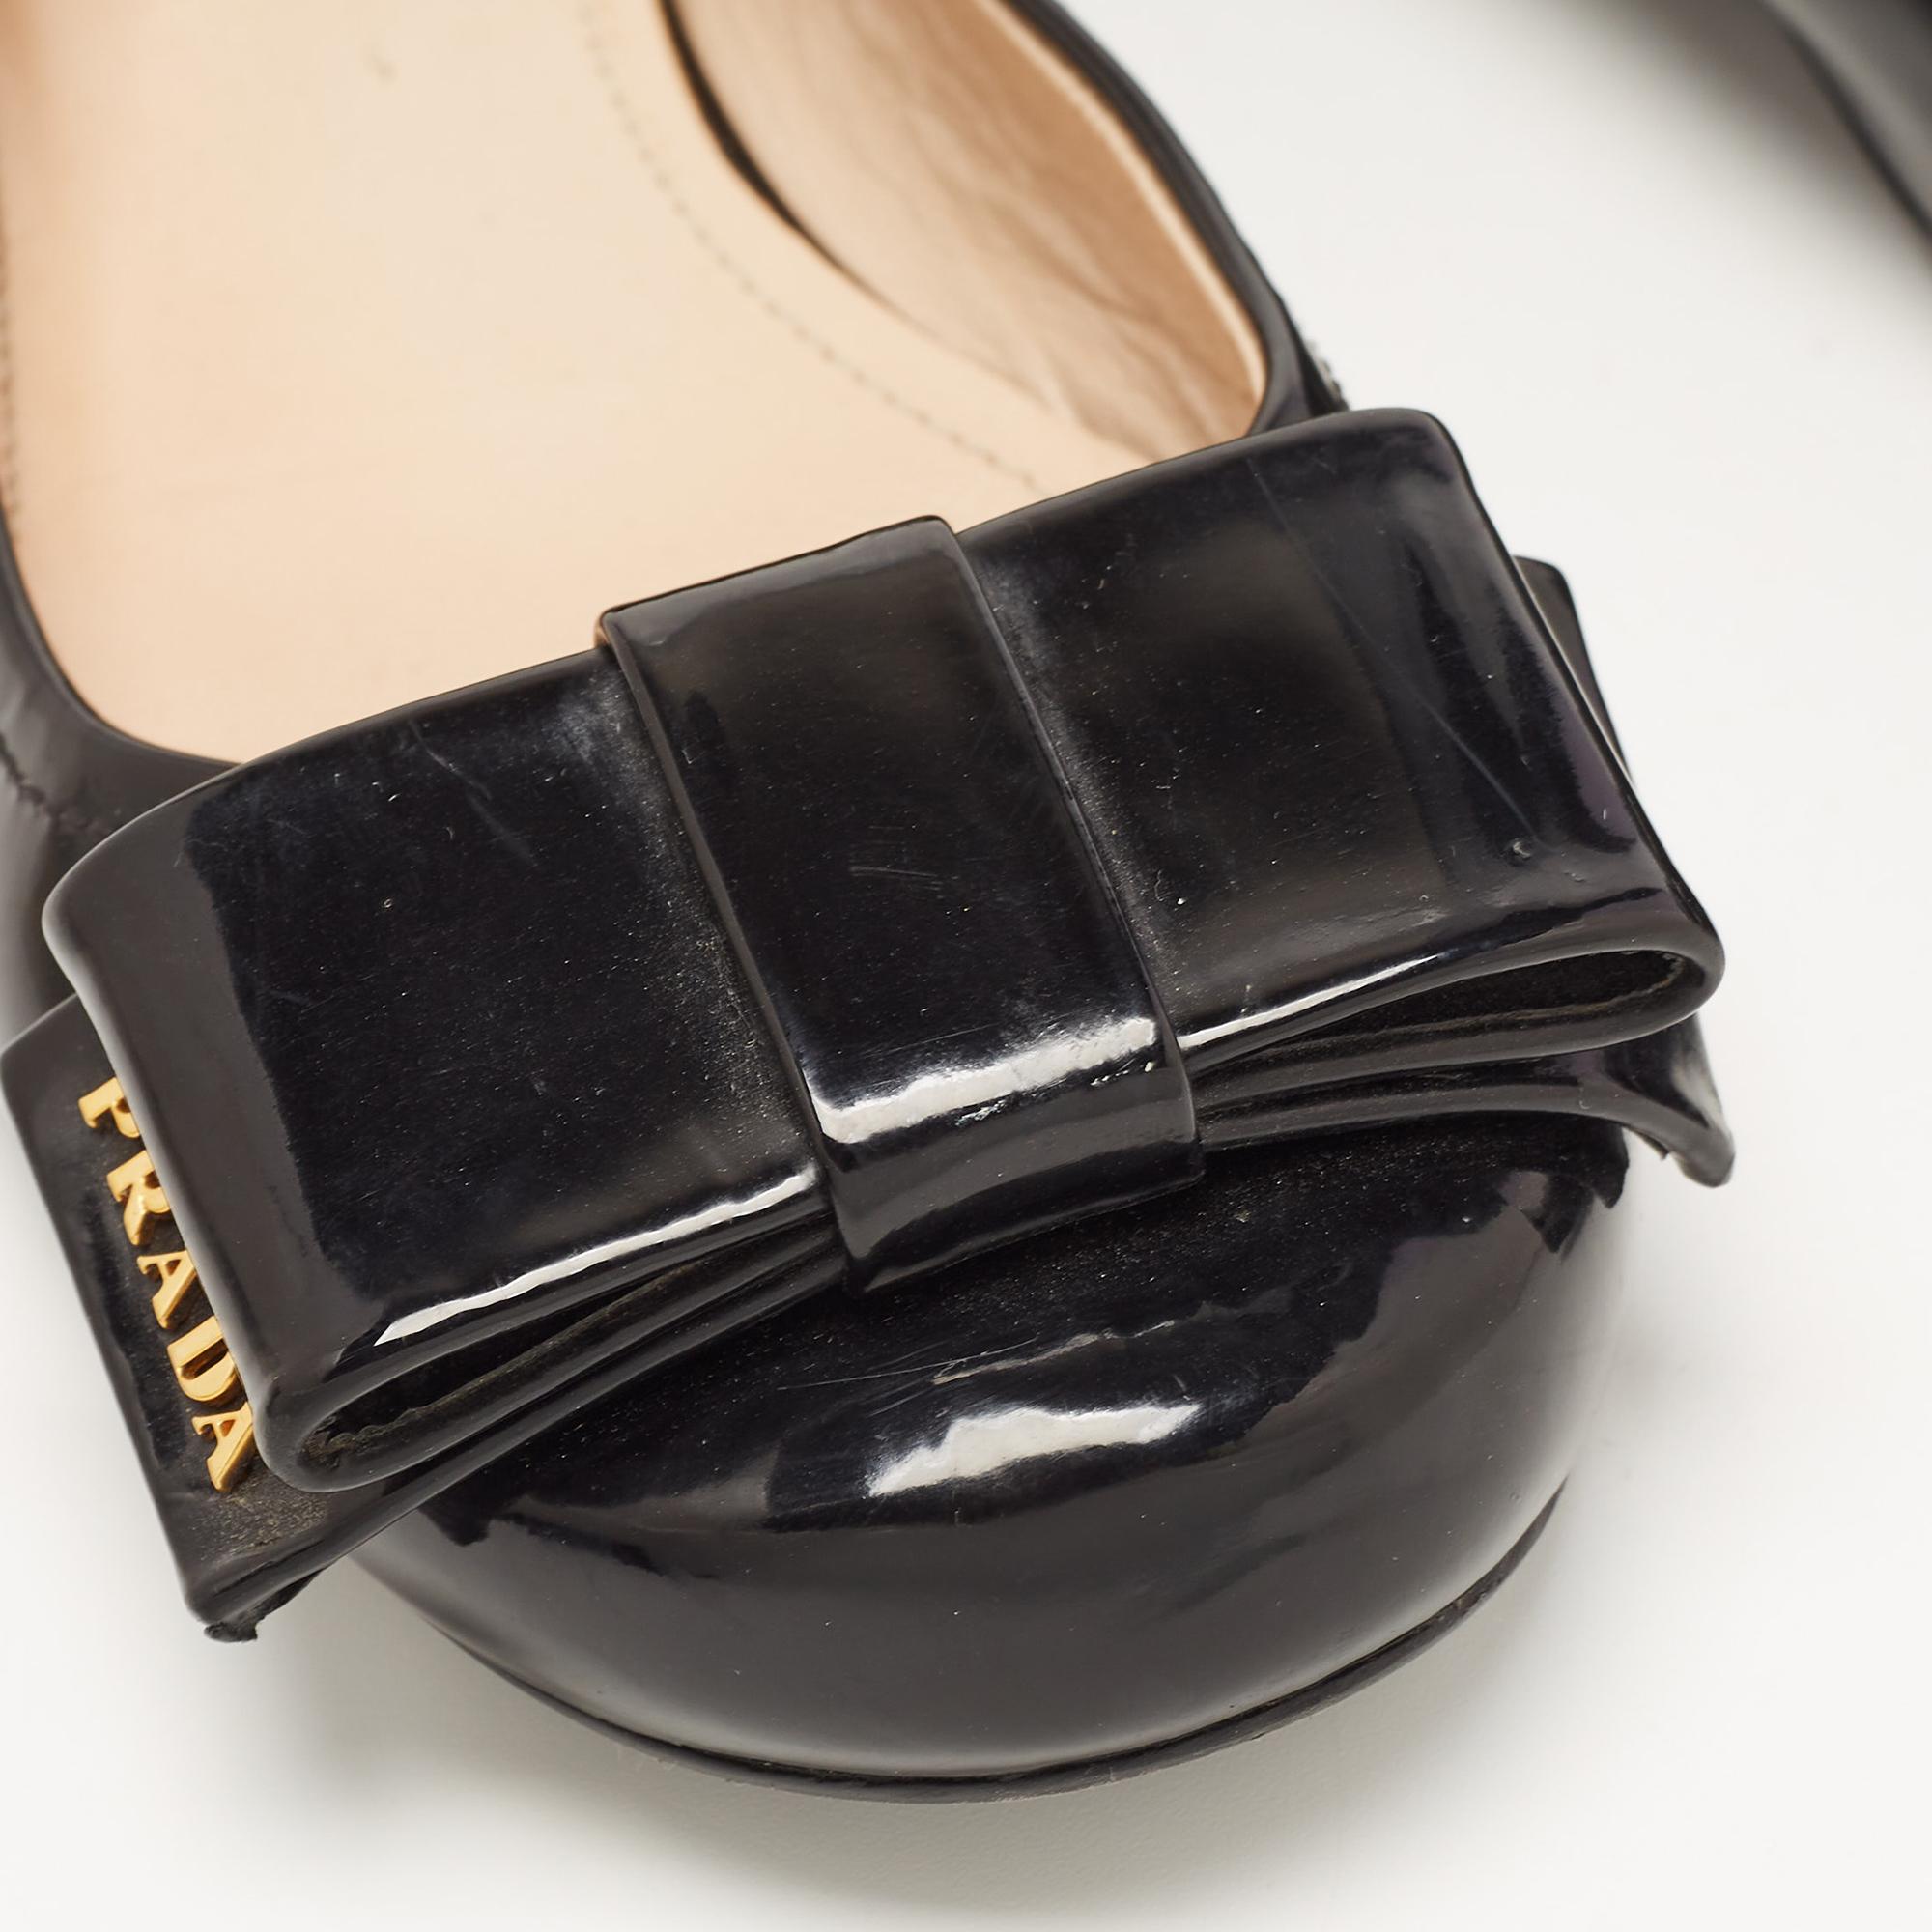 Prada Black Patent Leather Bow Ballet Flats Size 35 2